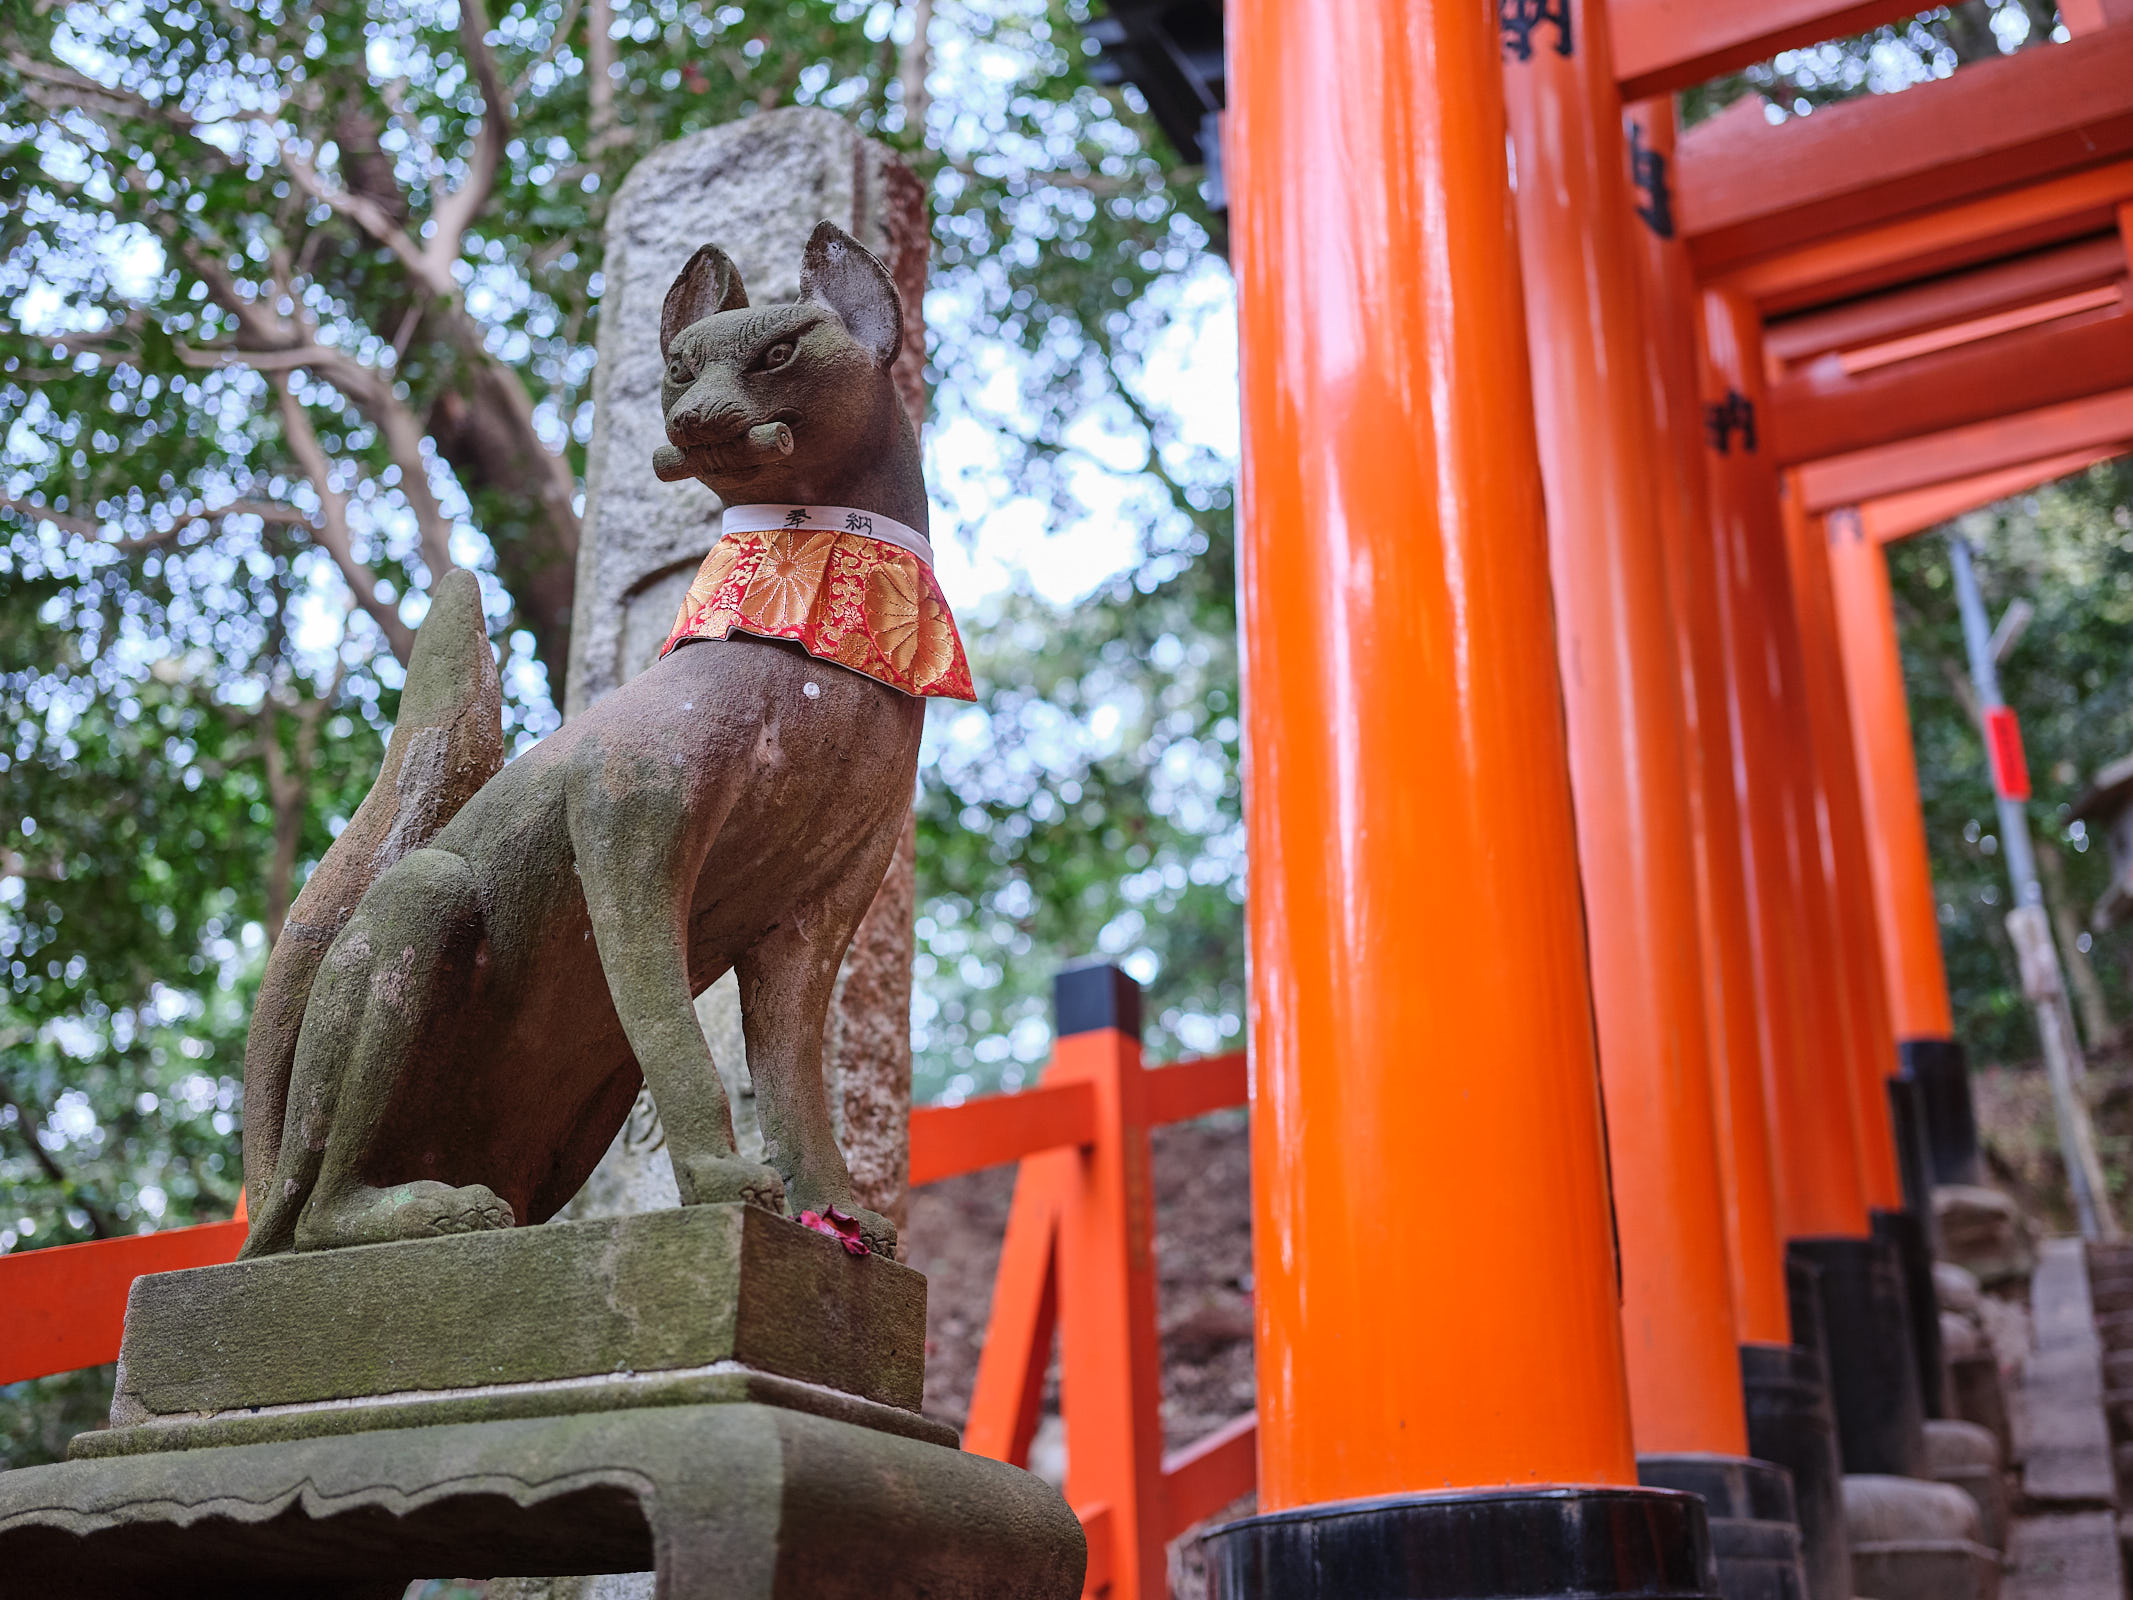 Fushimi Inari Shrine, Kyoto, Japan